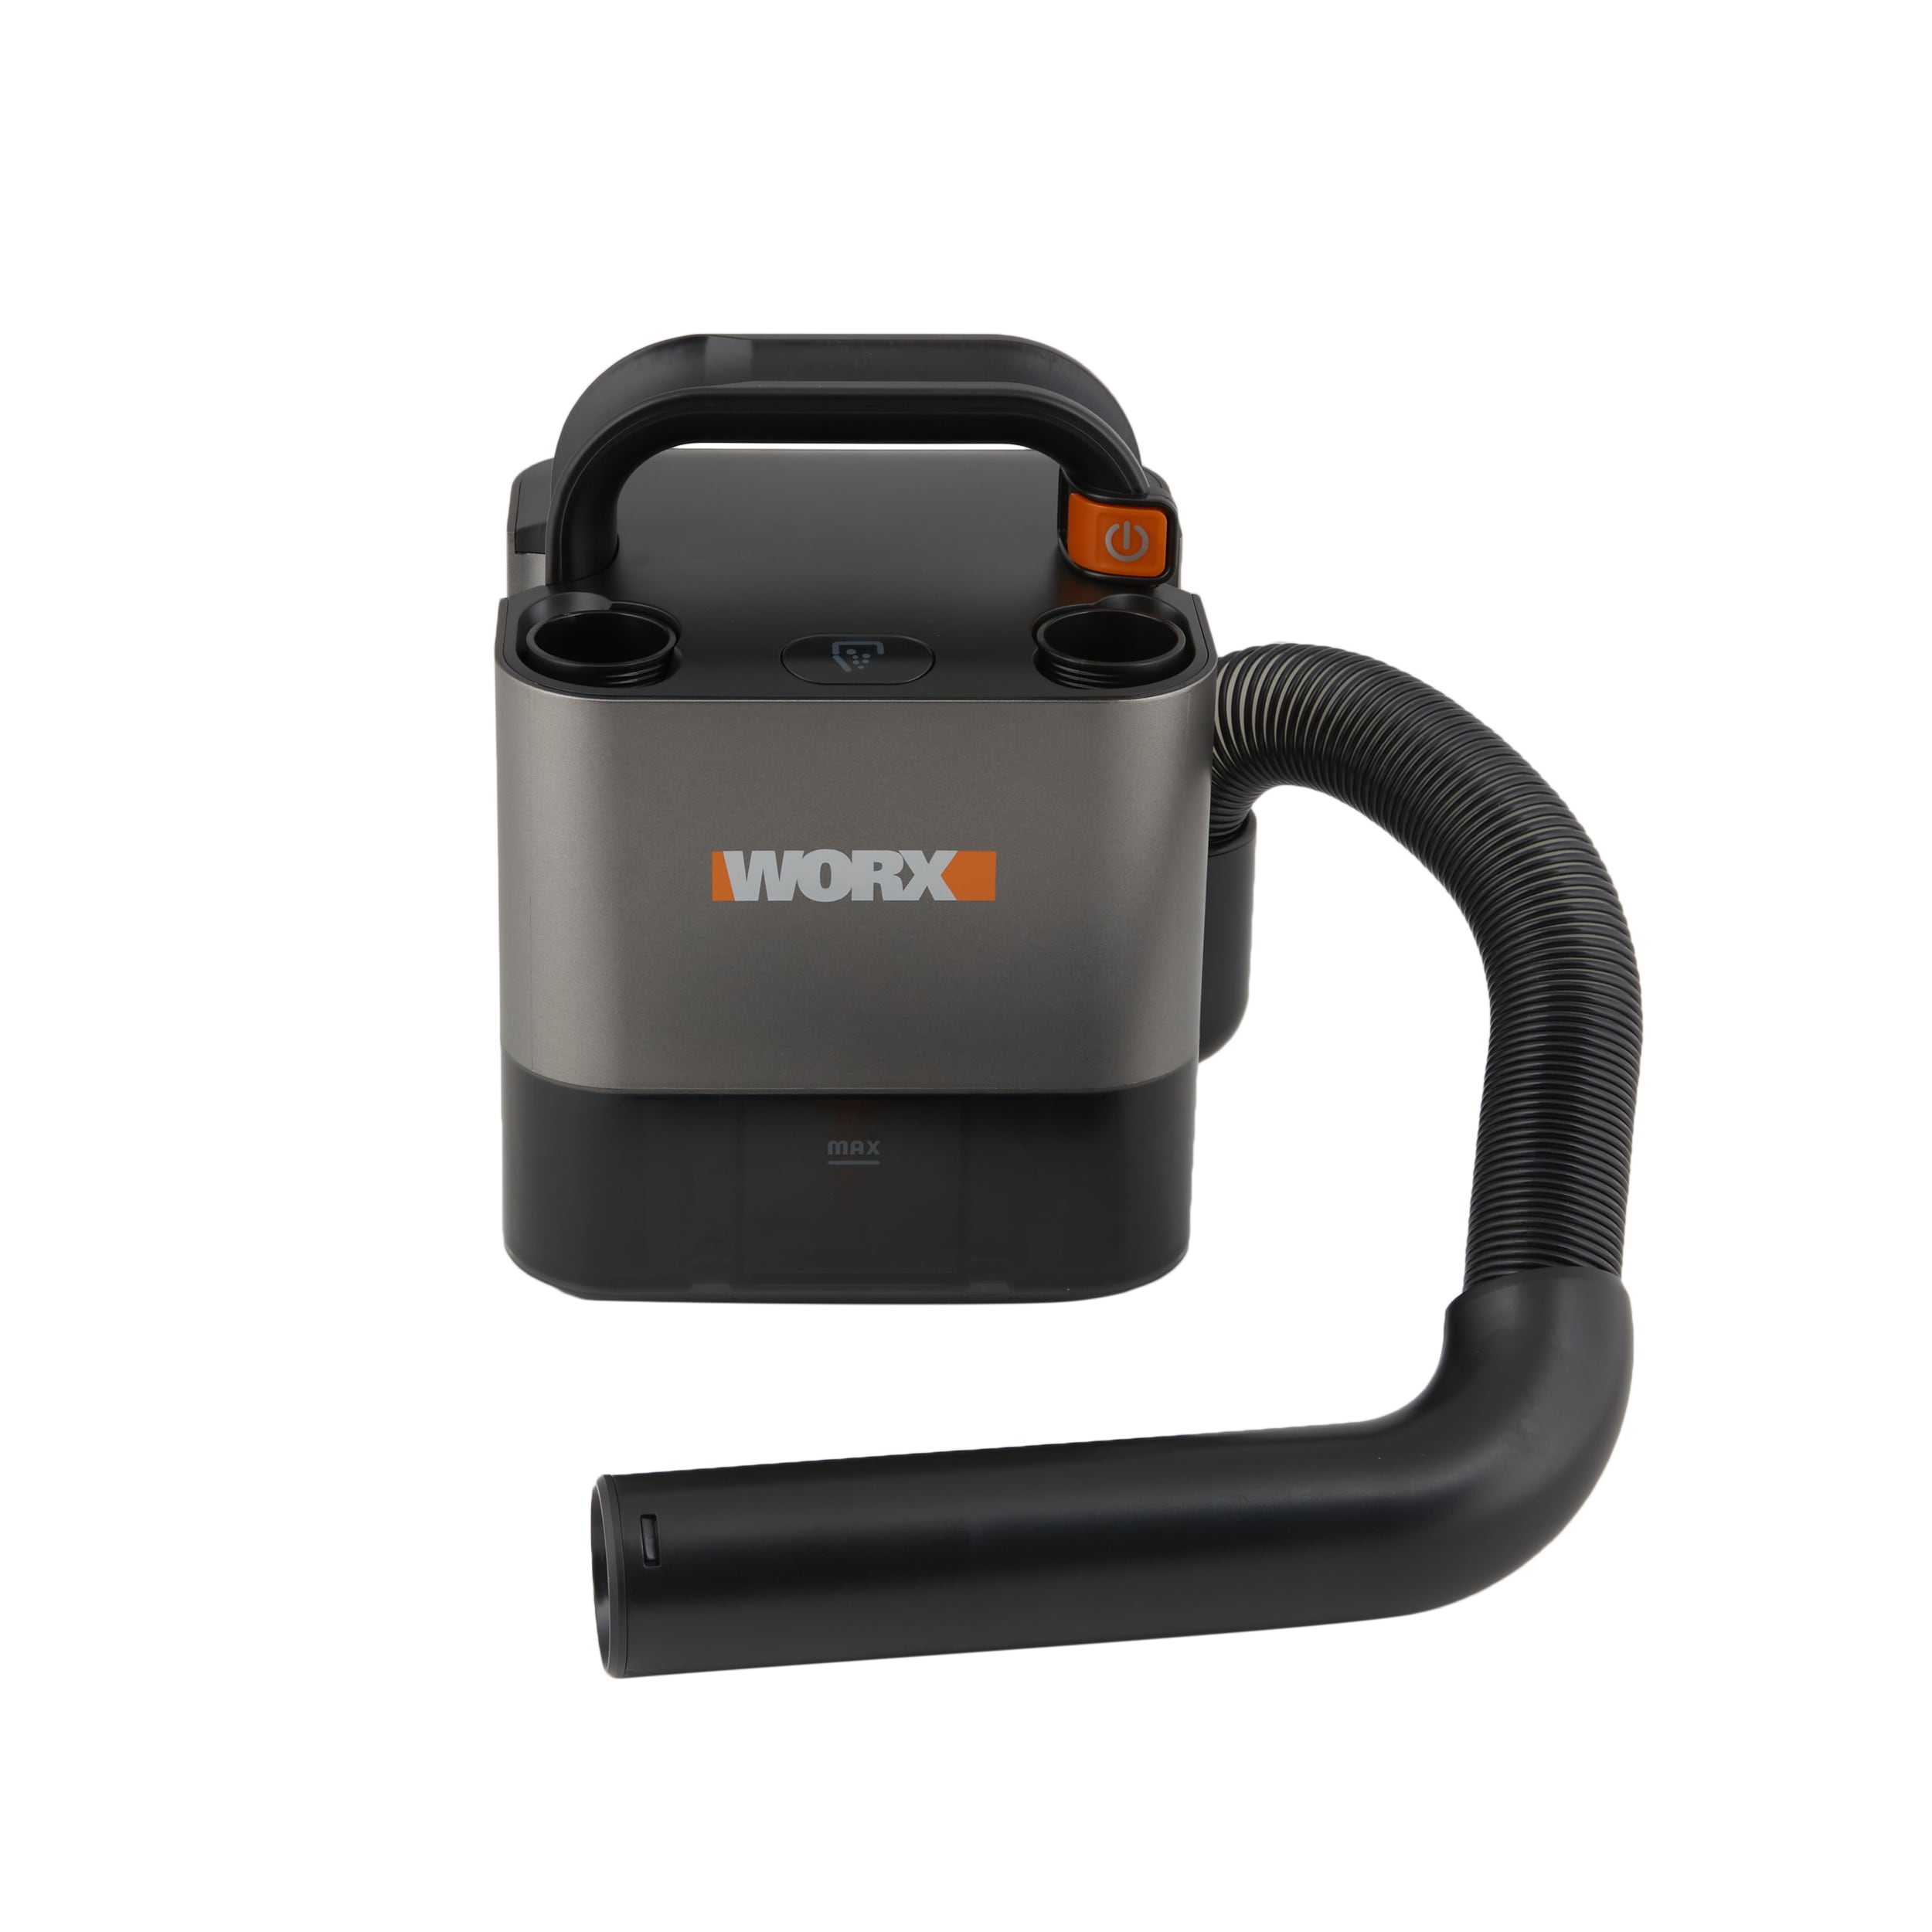 THISWORX Car Vacuum Cleaner - Portable, High Power, Handheld Vacuum